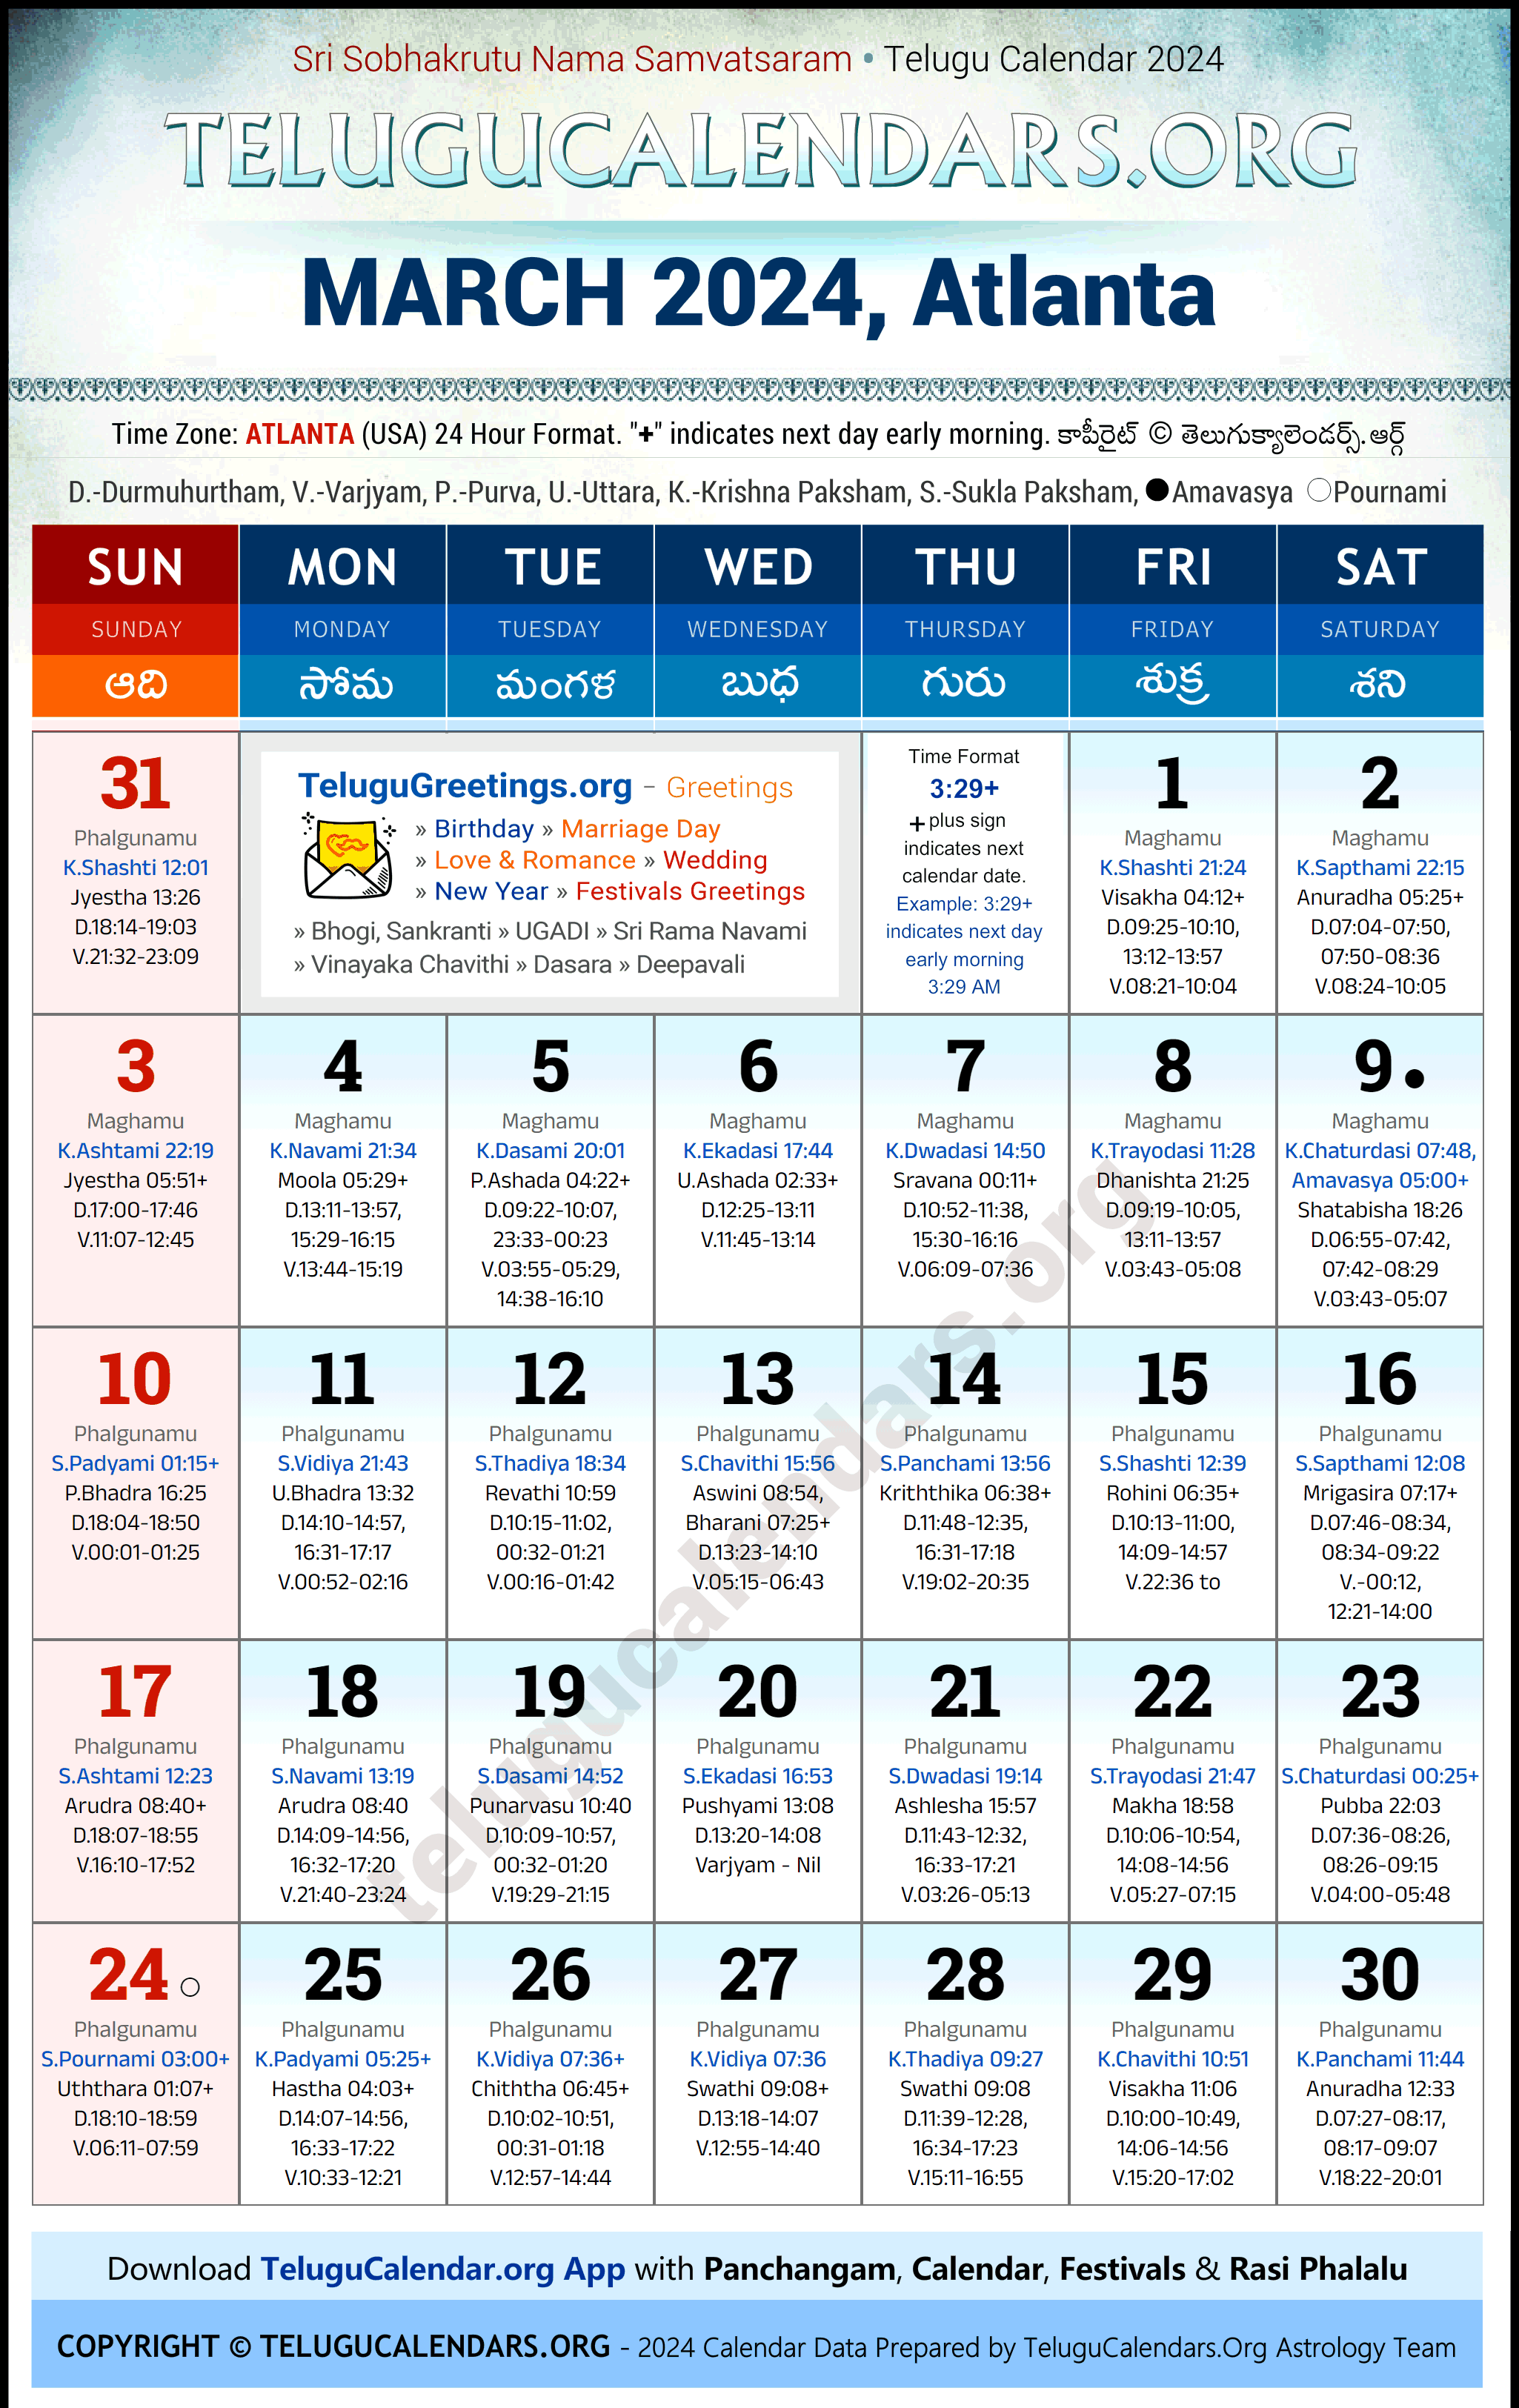 Telugu Calendar 2024 March Festivals for Atlanta